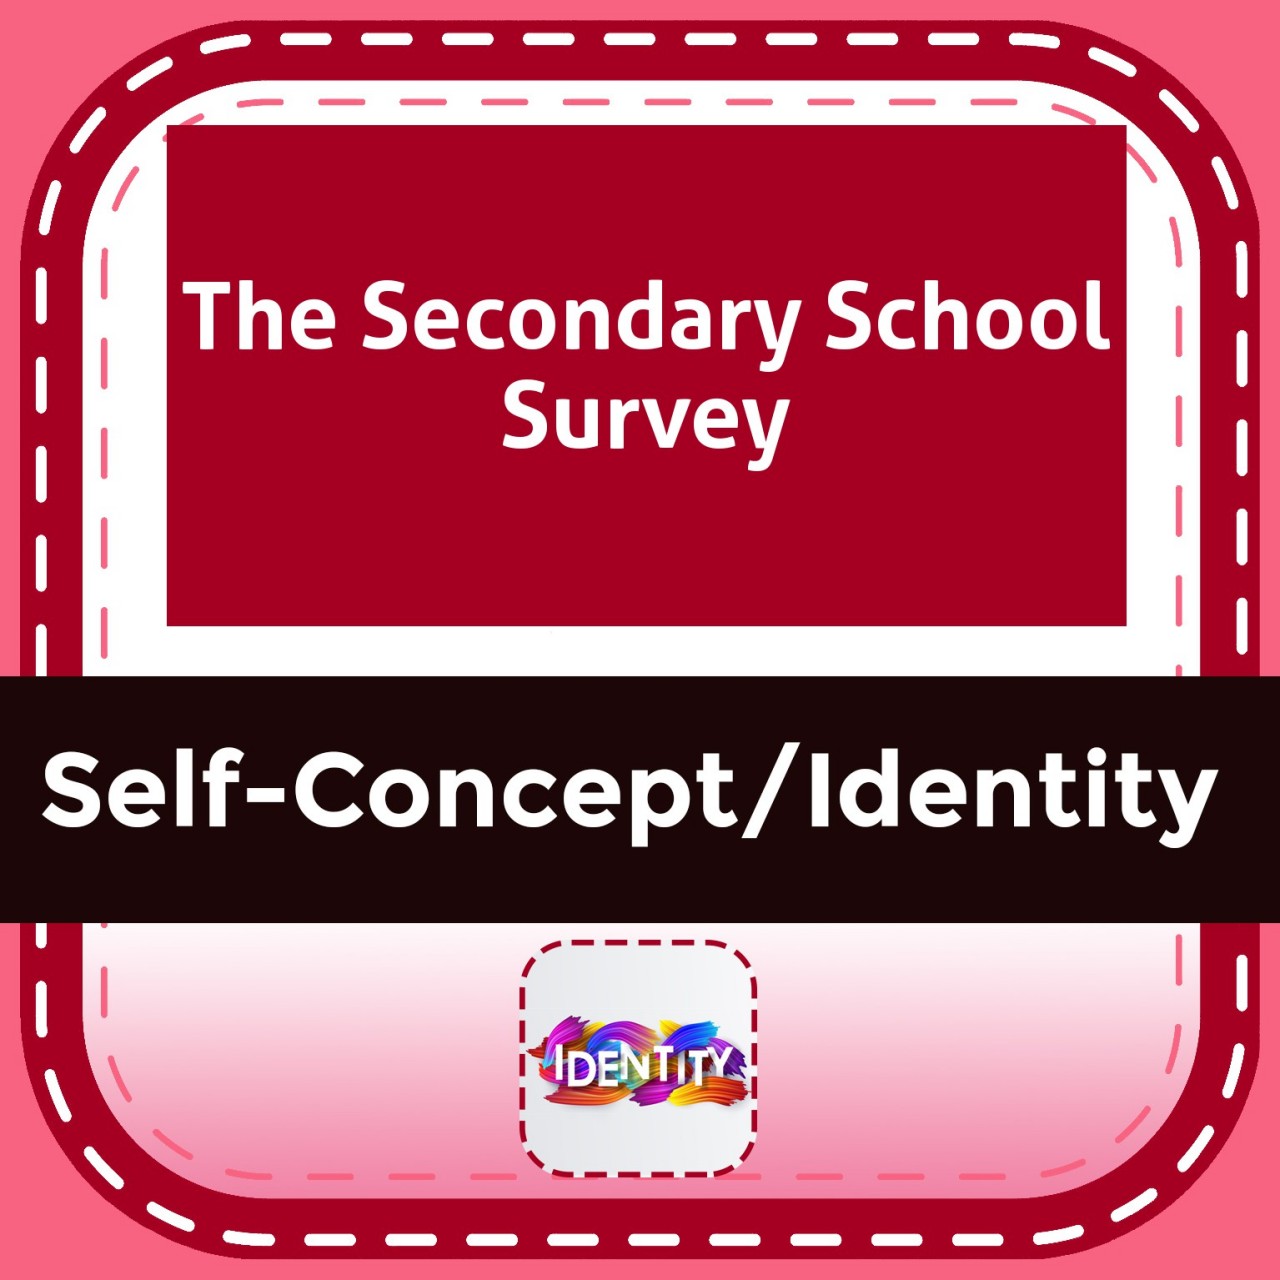 The Secondary School Survey